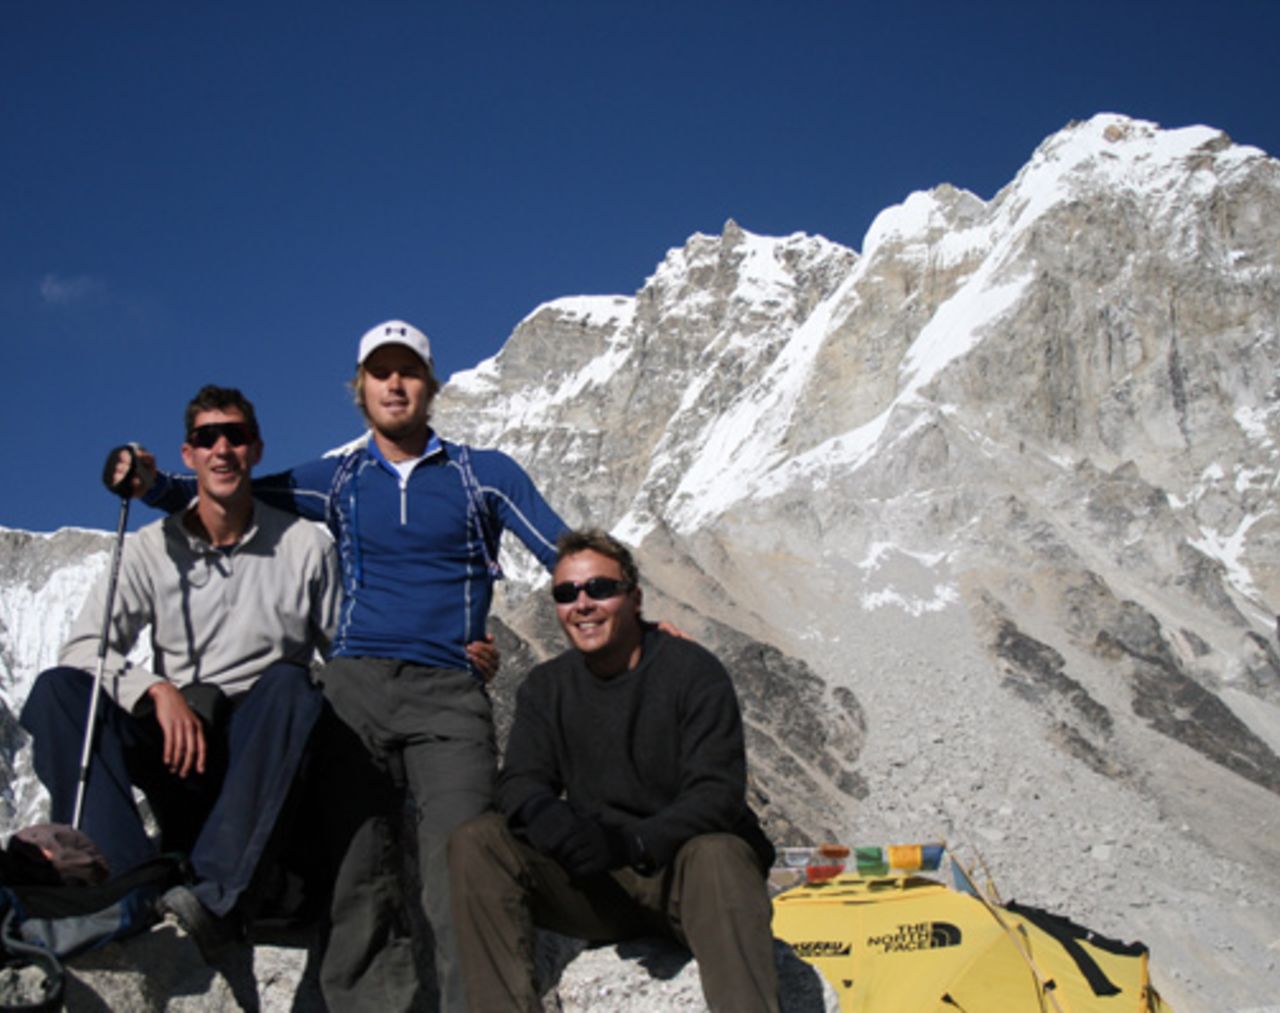 Nick Compton on his Everest trek, Mount Everest, November, 2007